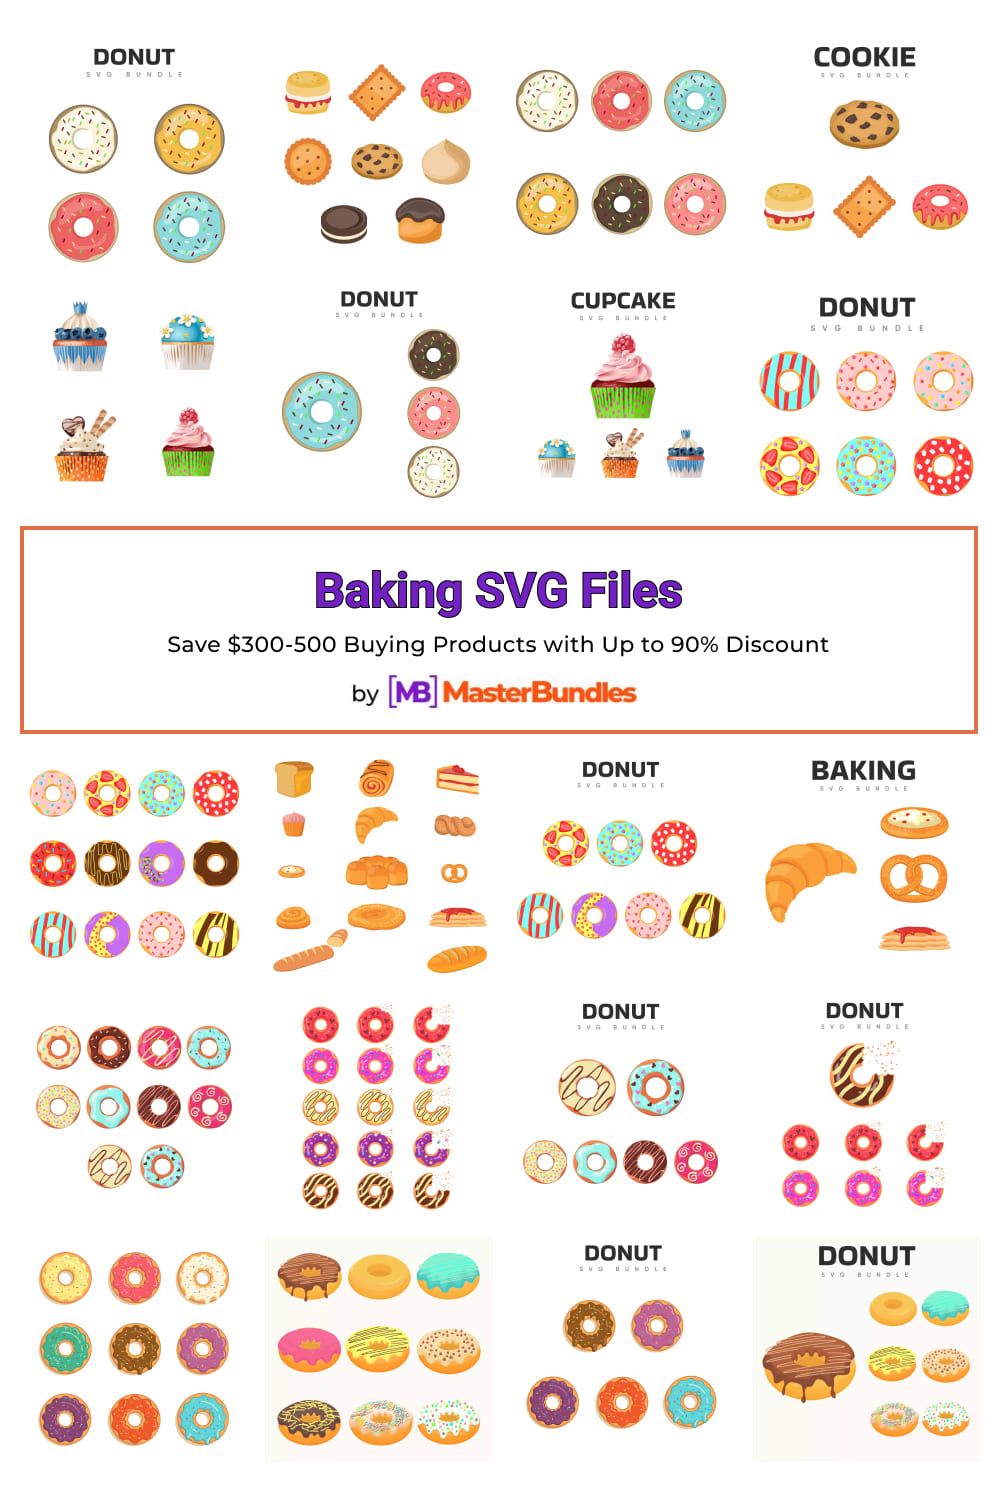 Baking SVG Files Pinterest image.